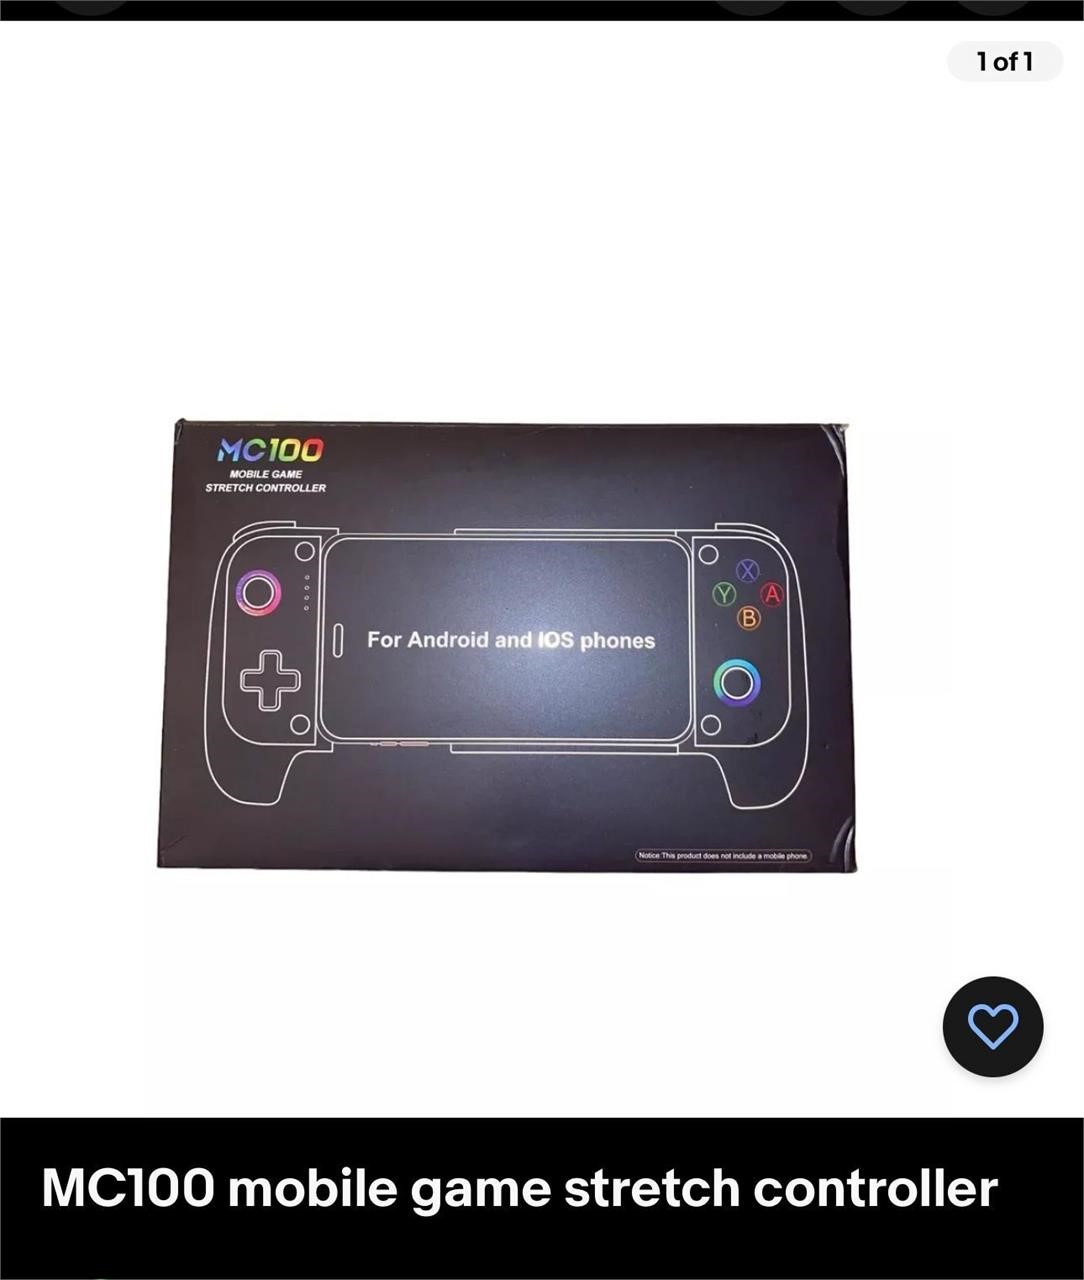 MC100 mobile game stretch controller